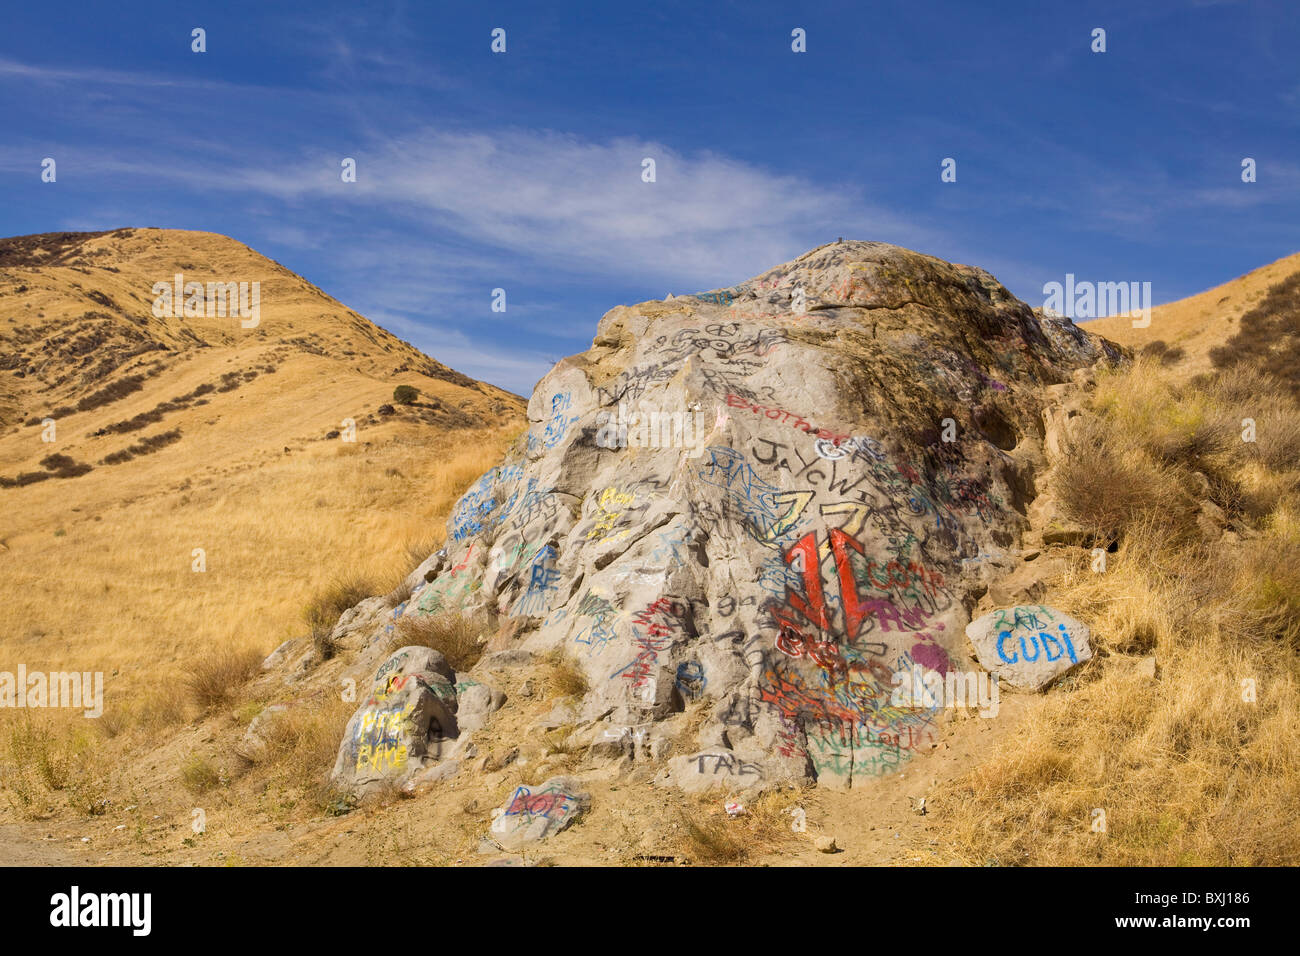 Graffiti ridden boulder - USA Stock Photo